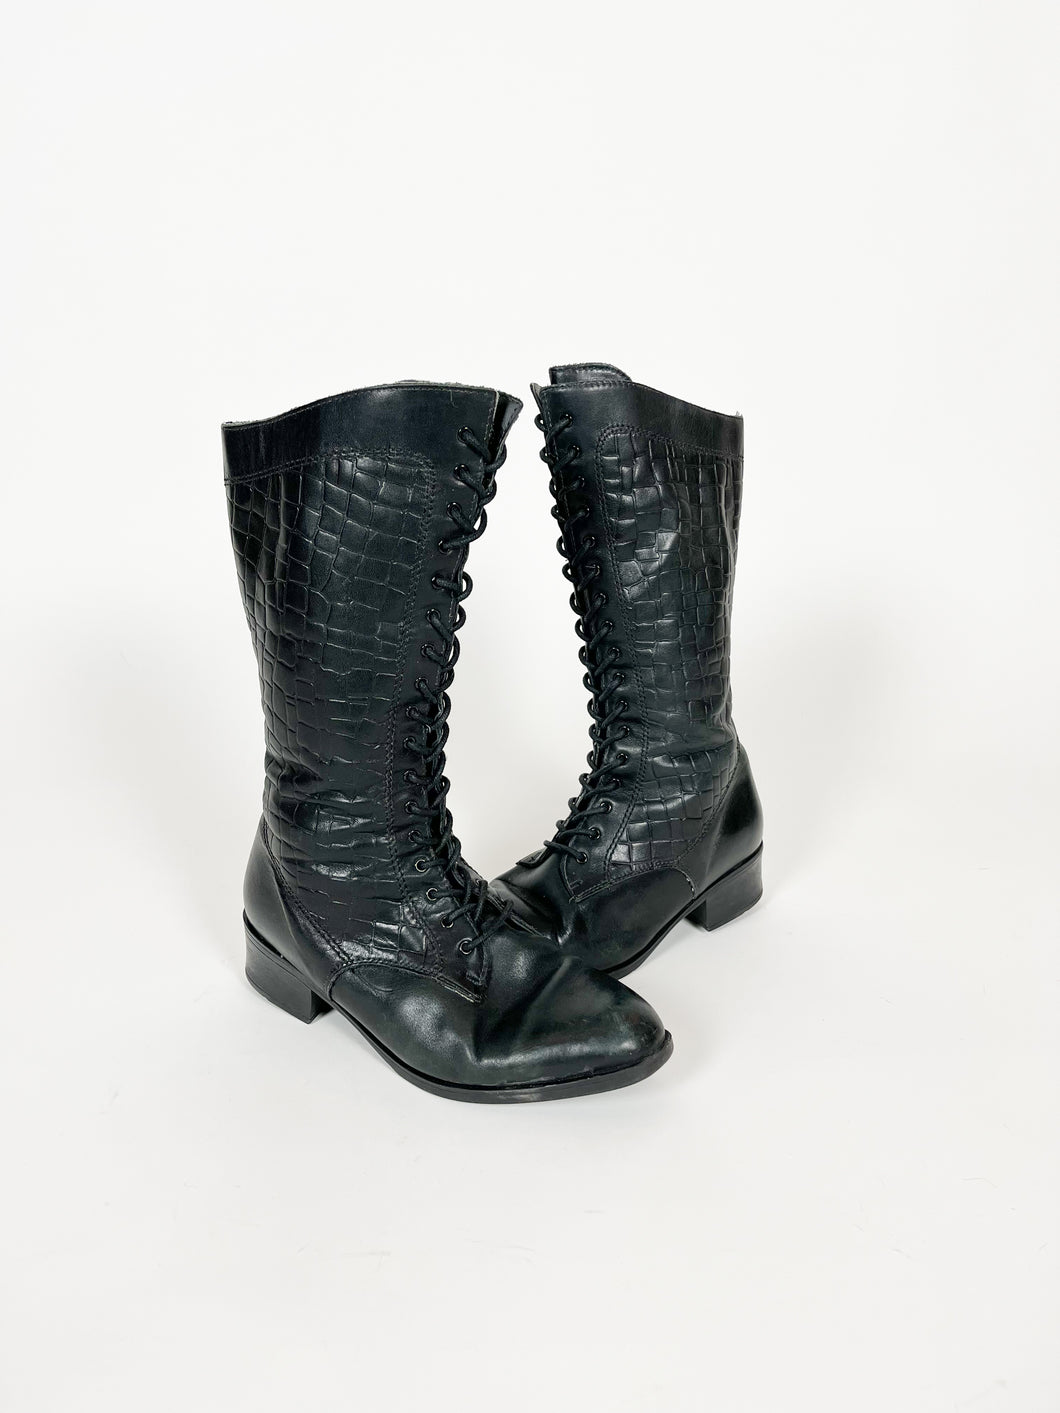 Vintage 90s Black Leather Lace Up Boots Size 9